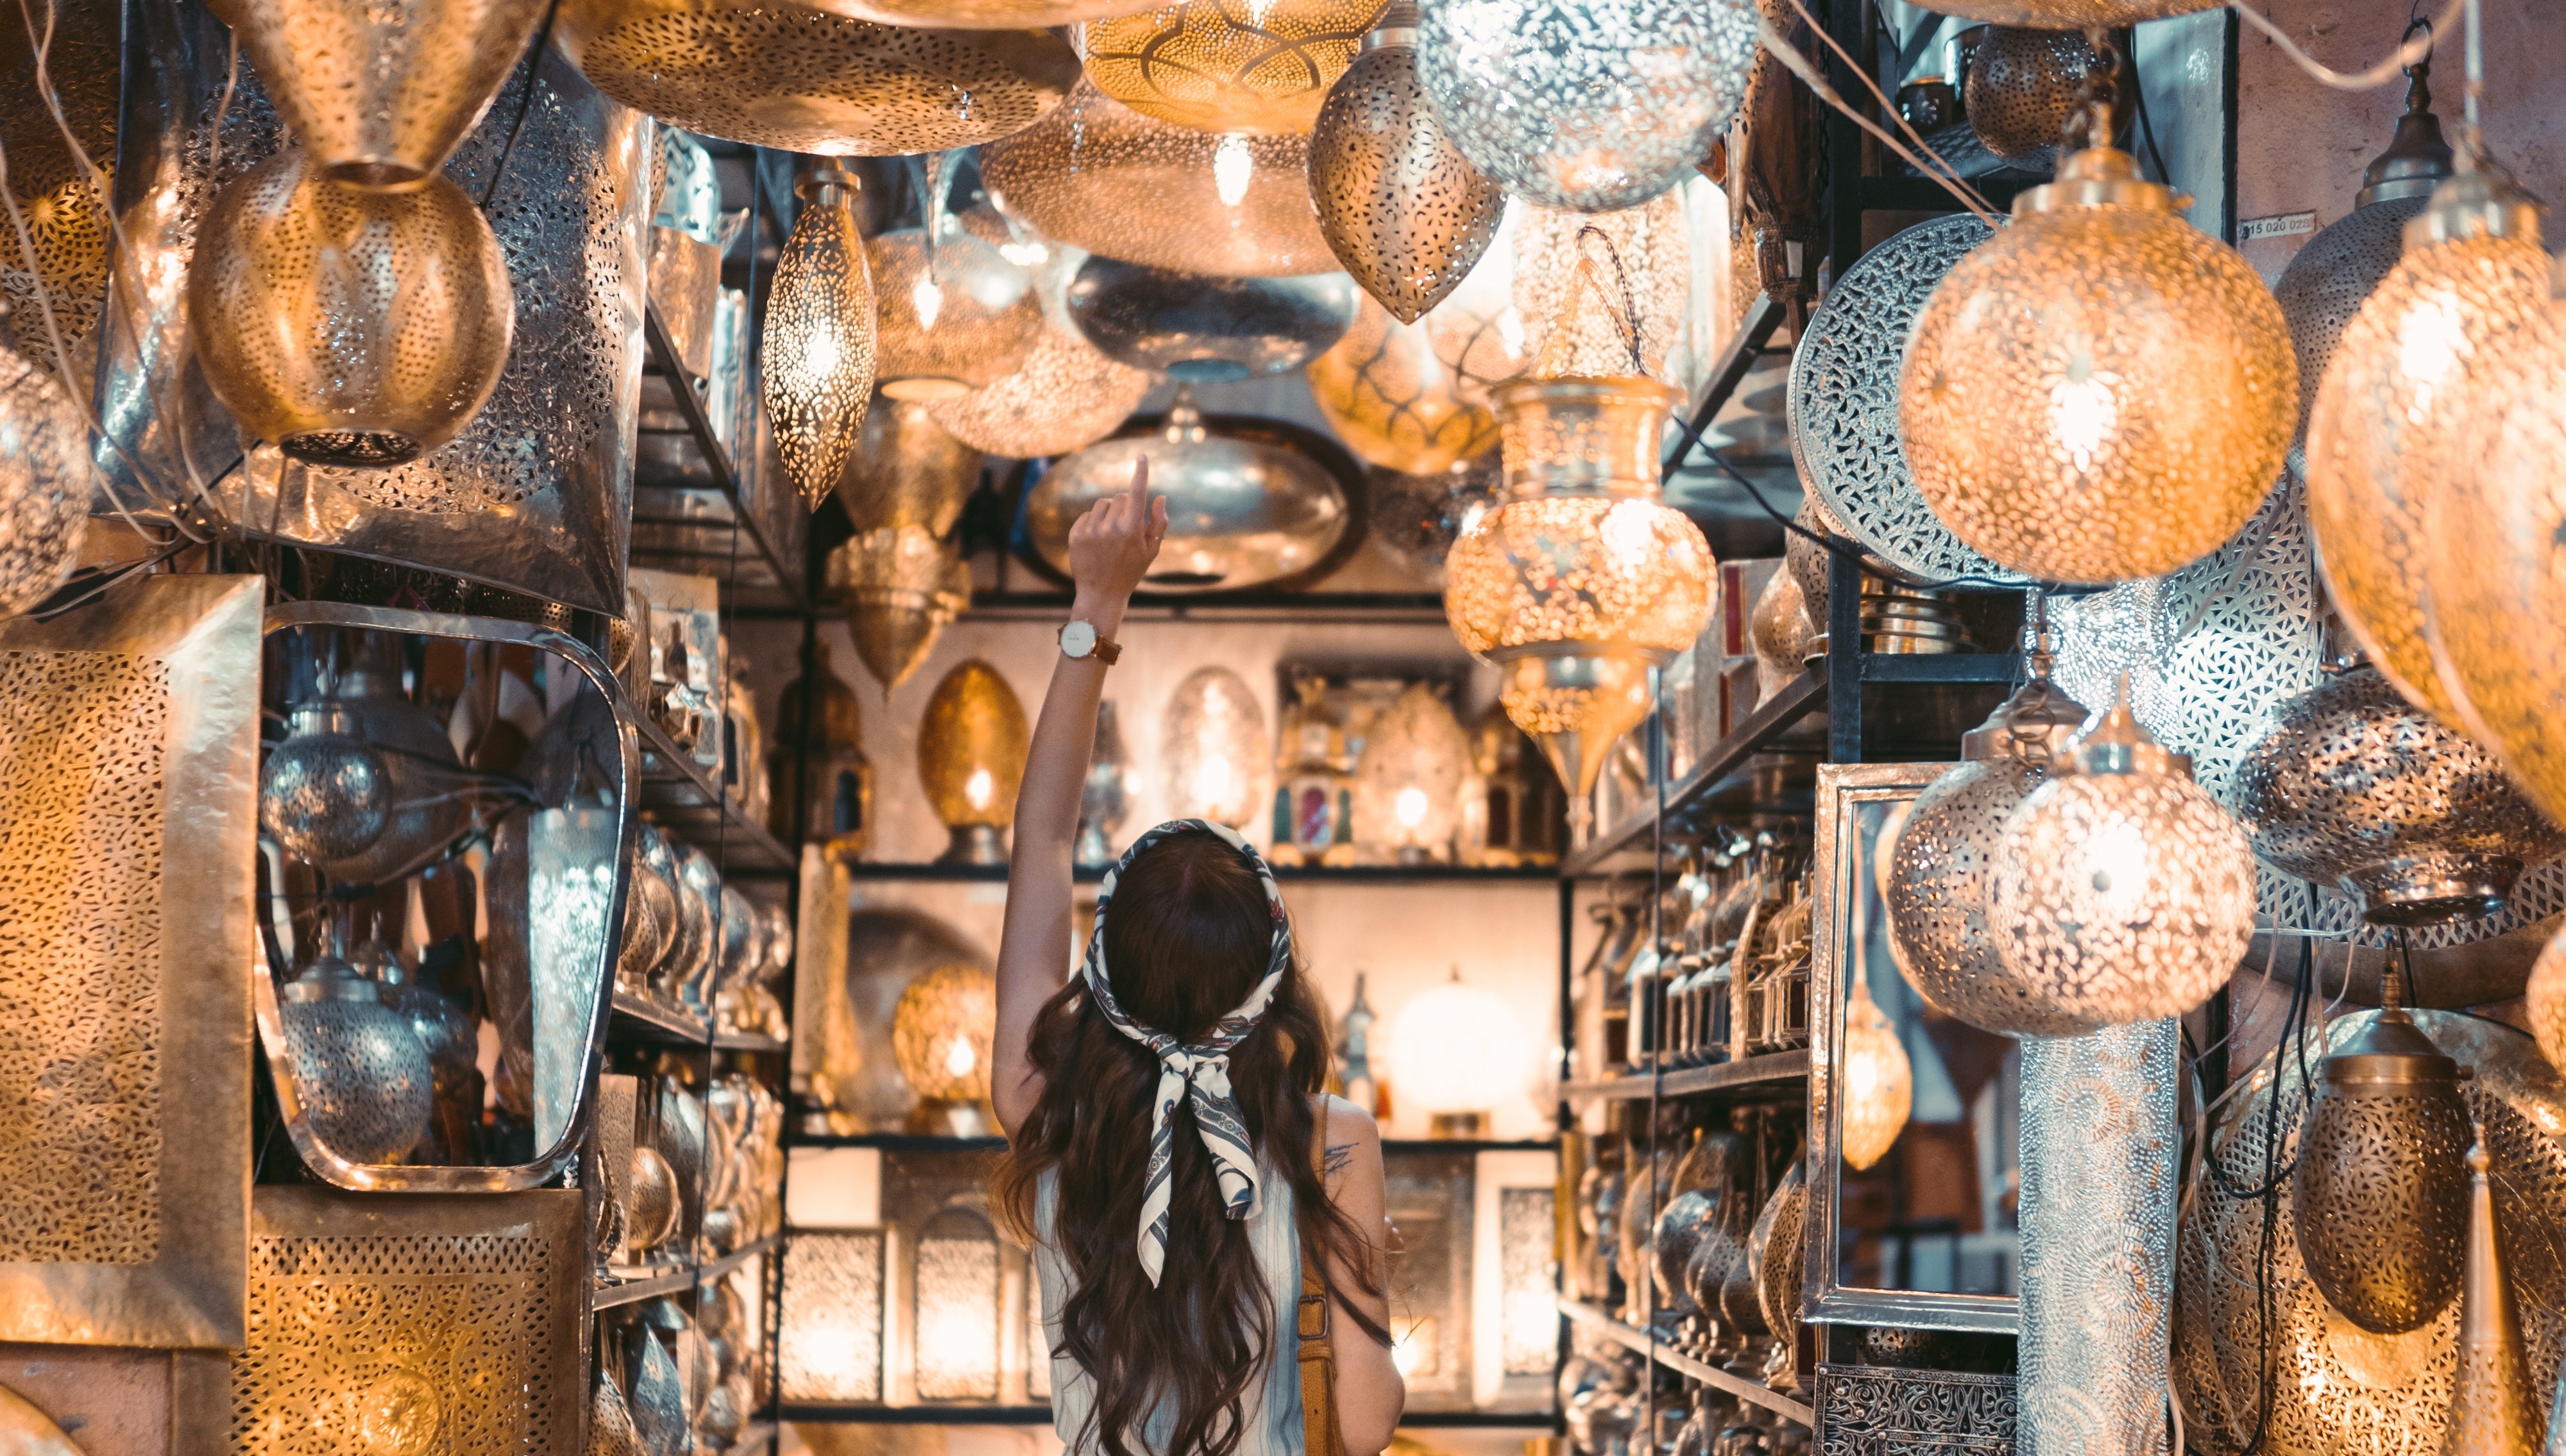 What should I buy in Marrakech Medina?